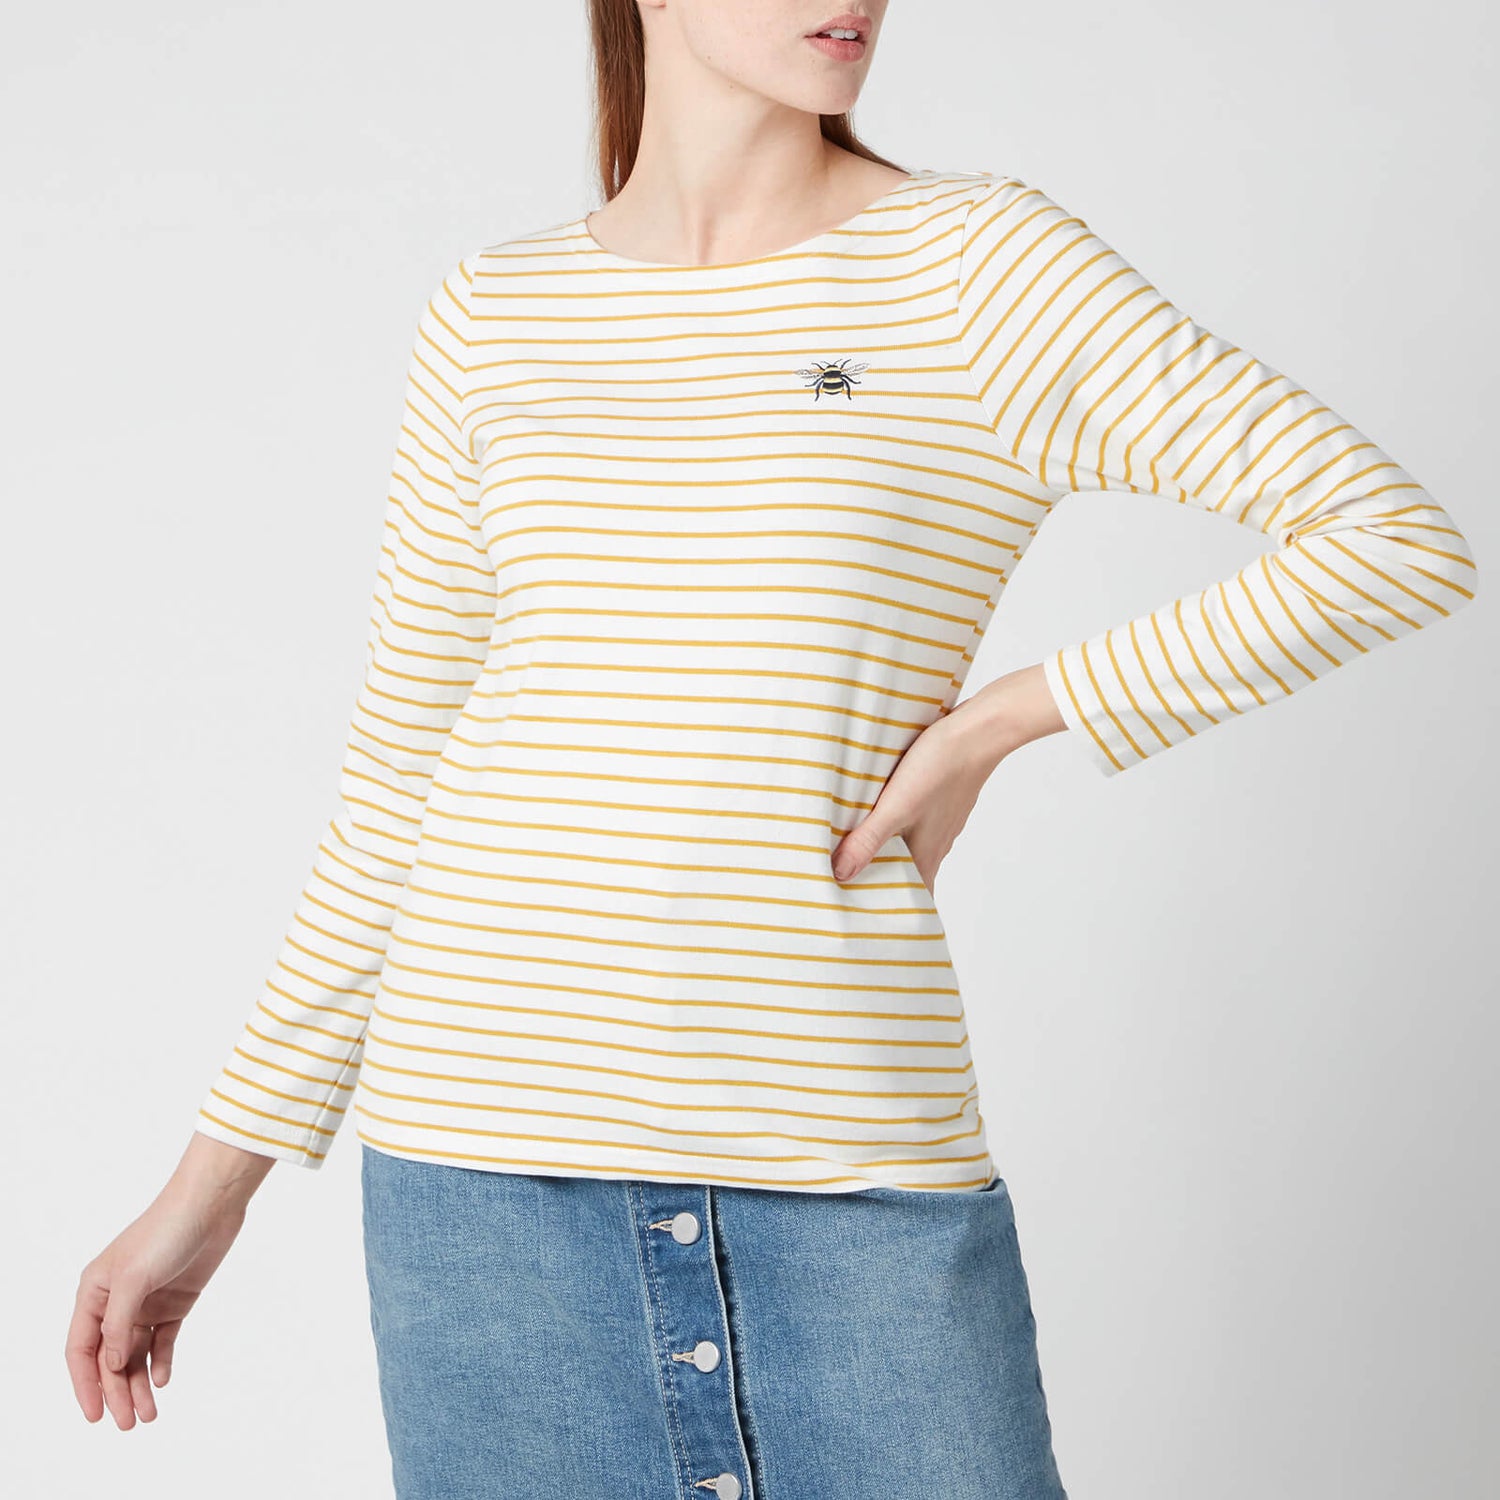 Joules Women's Harbour Print Long Sleeve Top - Cream Gold Stripe